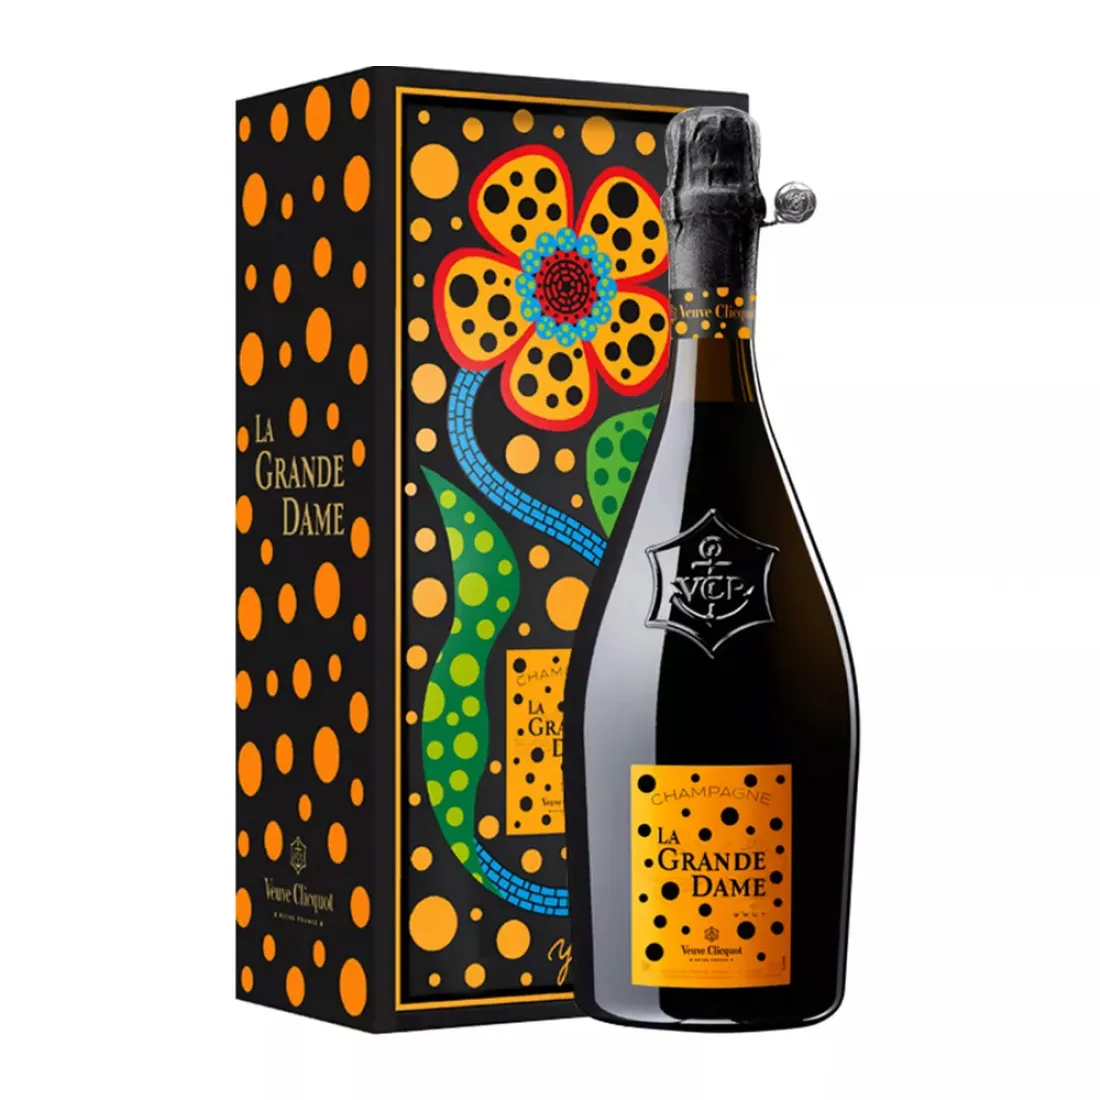 https://www.wineandchampagnegifts.com/image/cache/catalog/champagne-gifts/yayoi-kusama-veuve-clicquot-la-grande-dame-1100x1100.webp